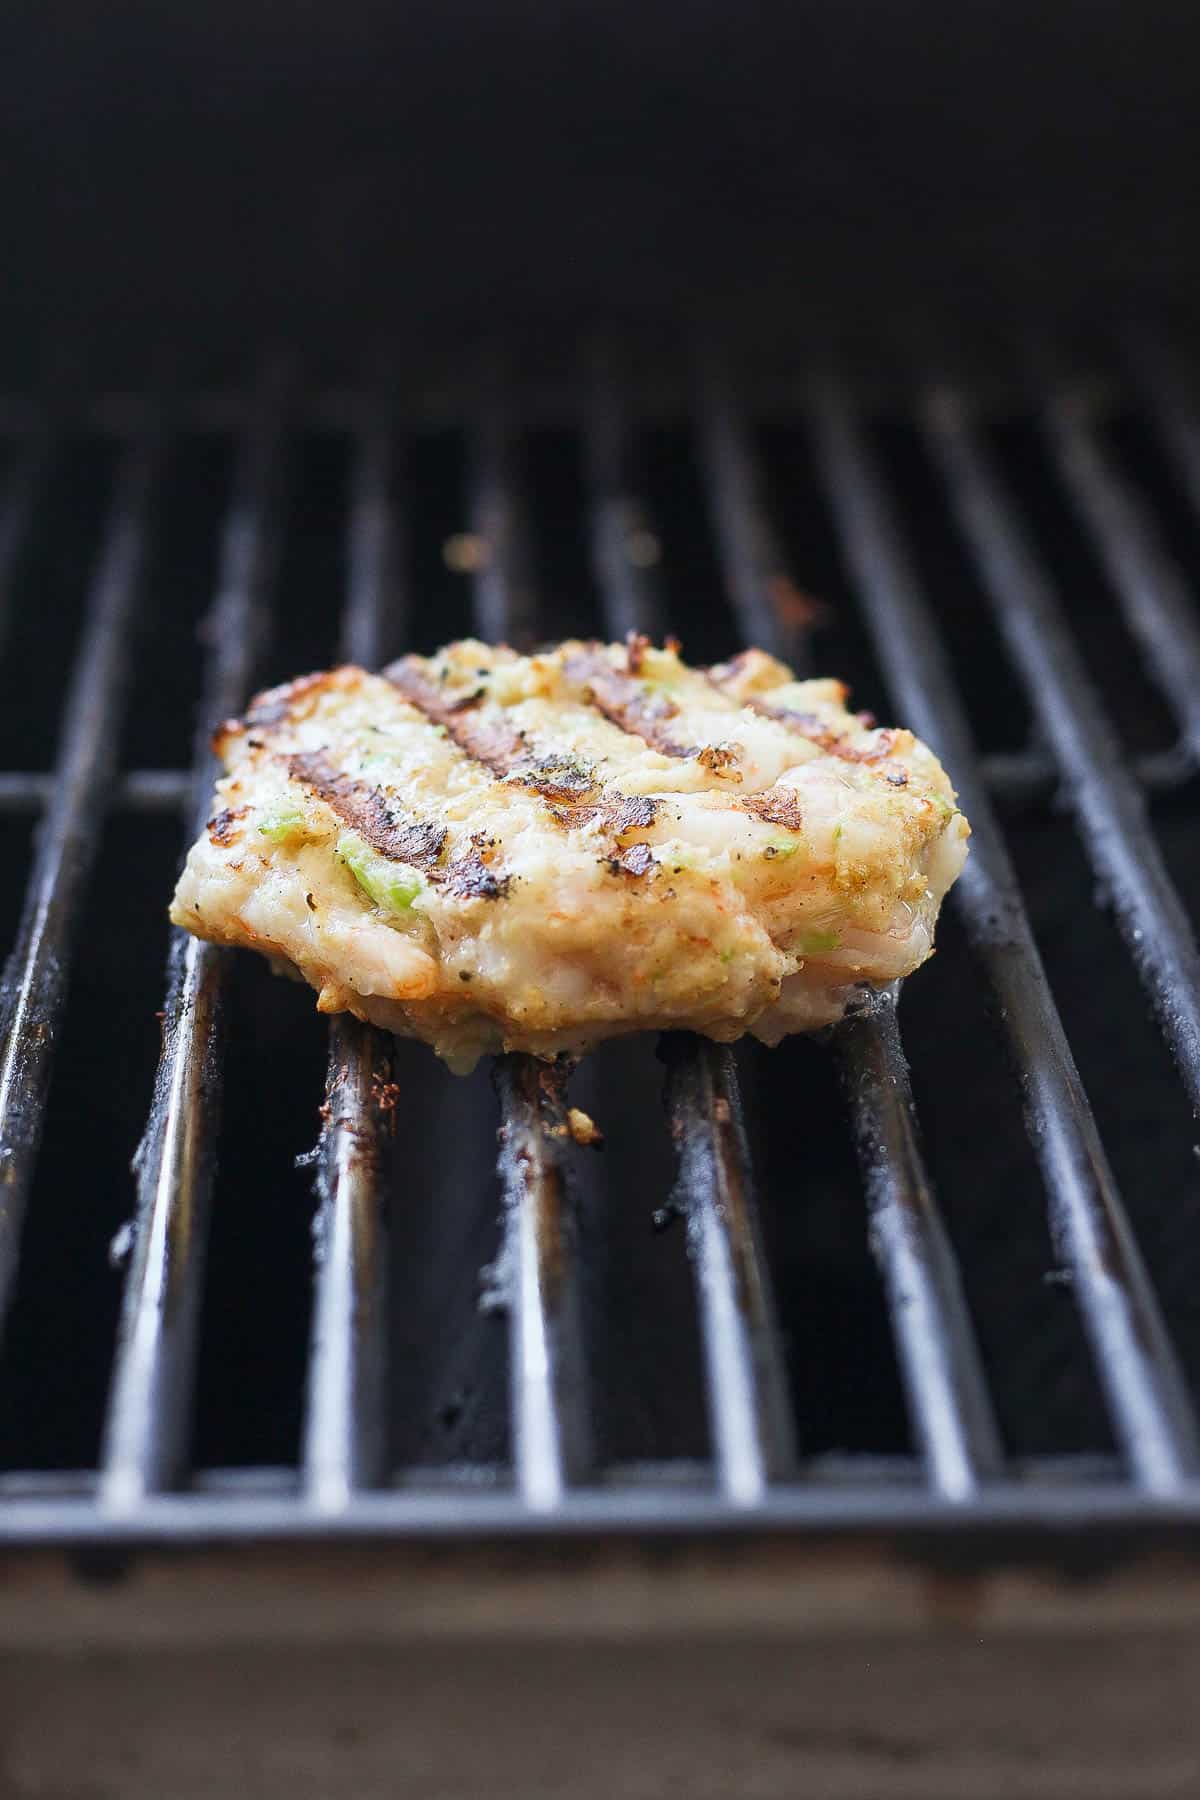 A shrimp burger on the grill.